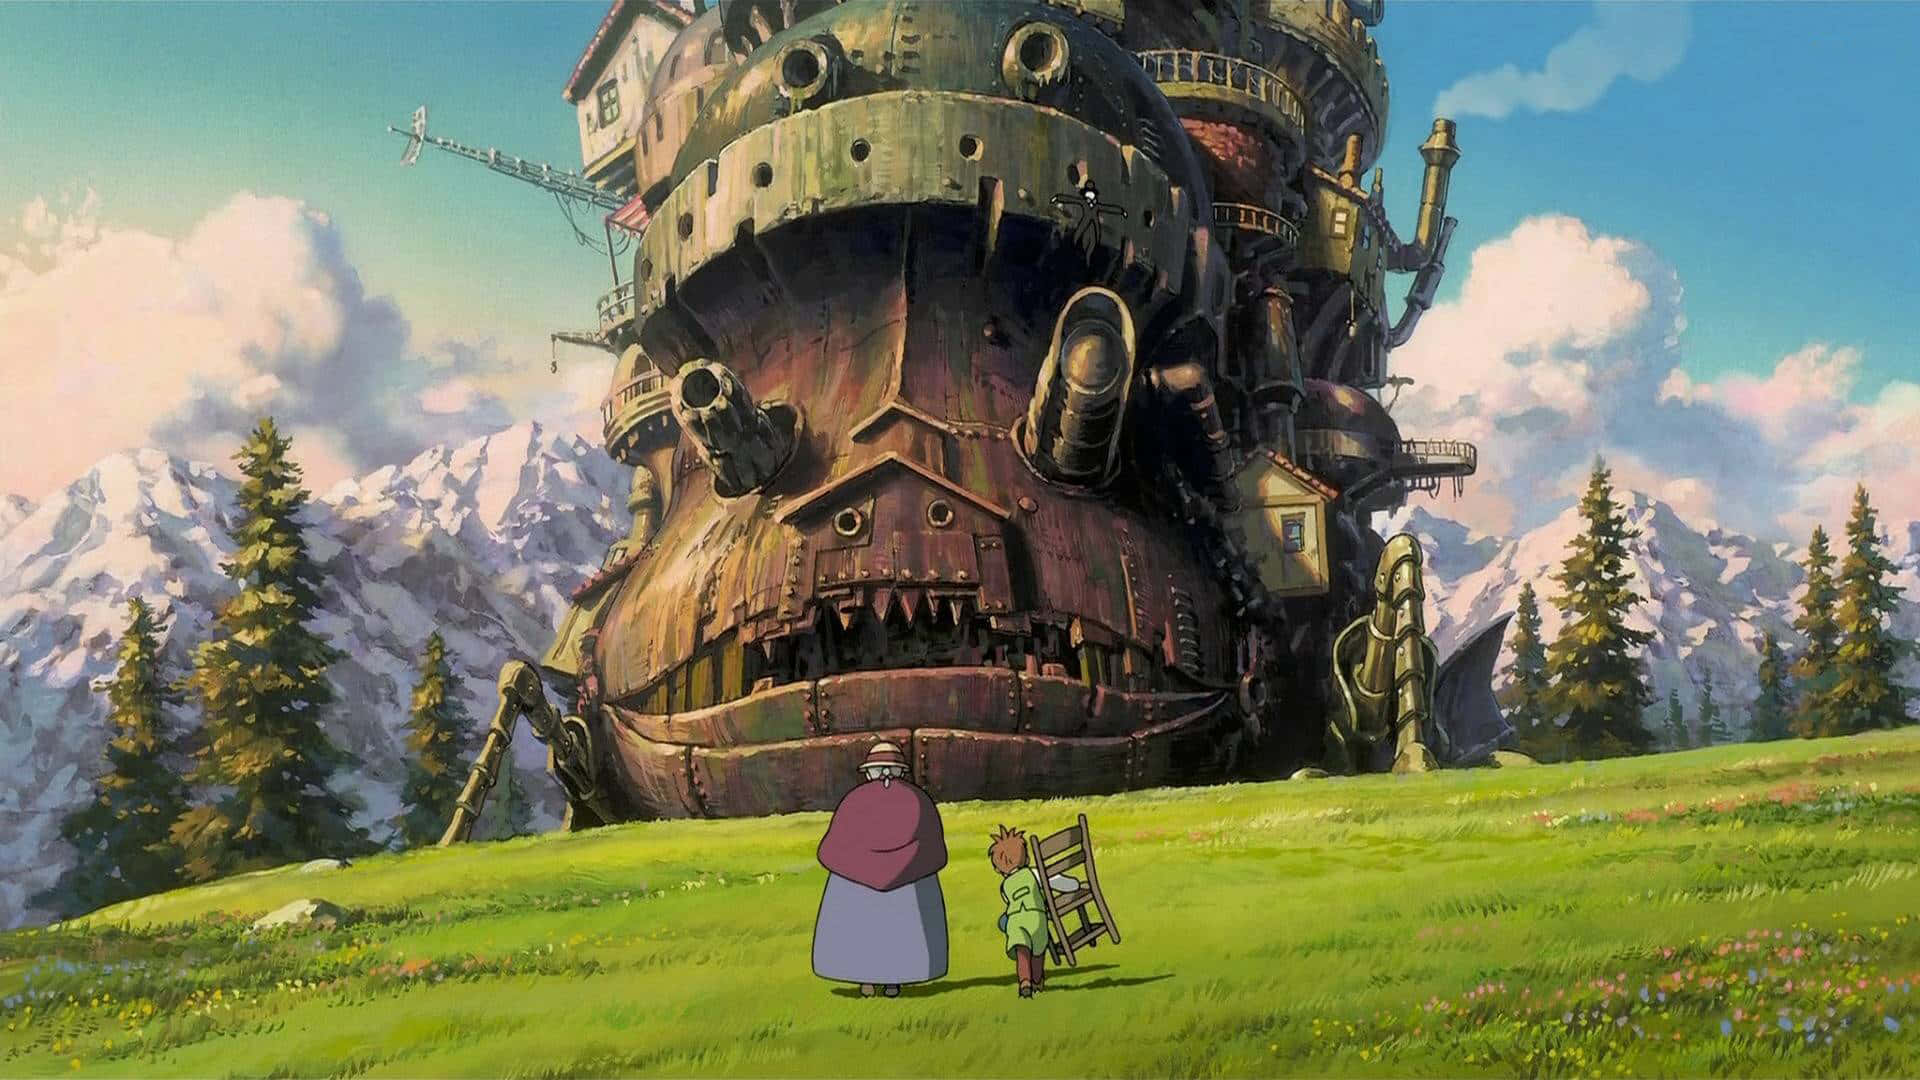 Spirited Adventure in Studio Ghibli's Enchanting World